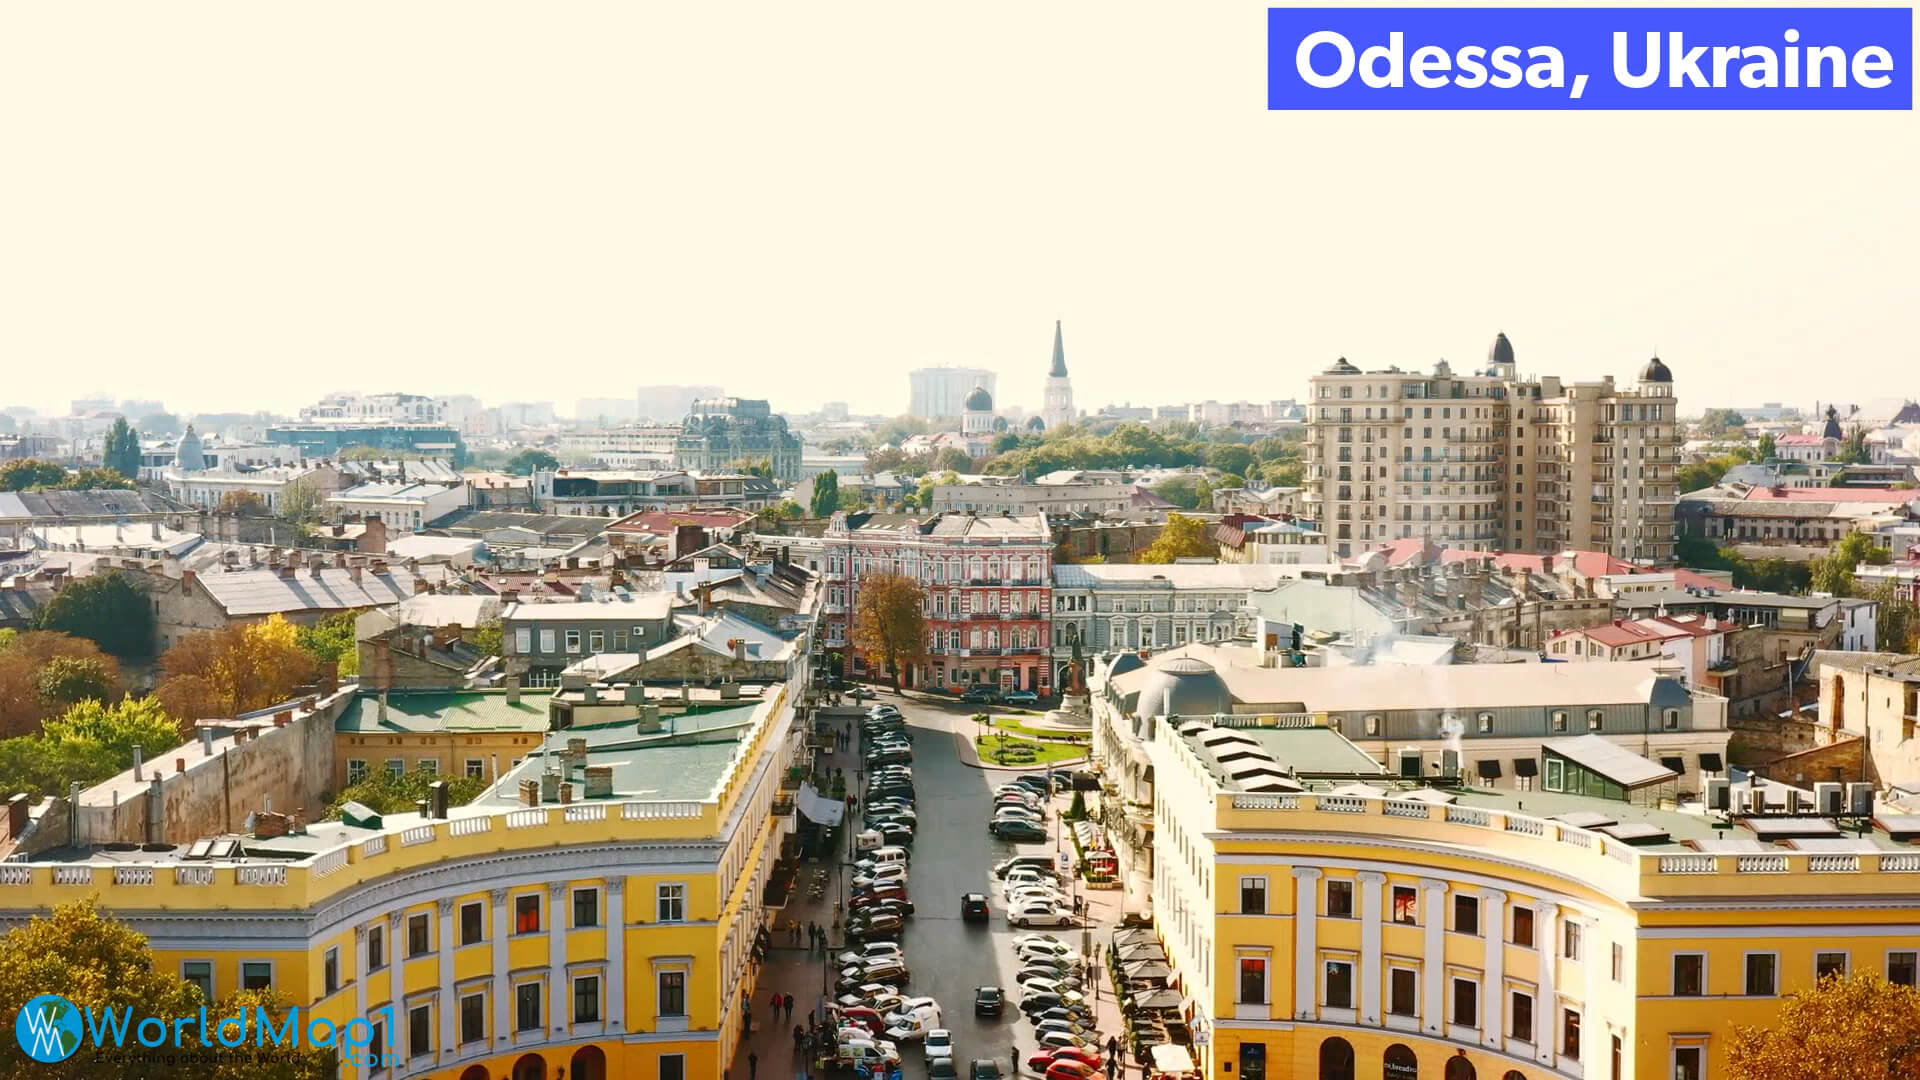 City Center of Odessa in Ukraine